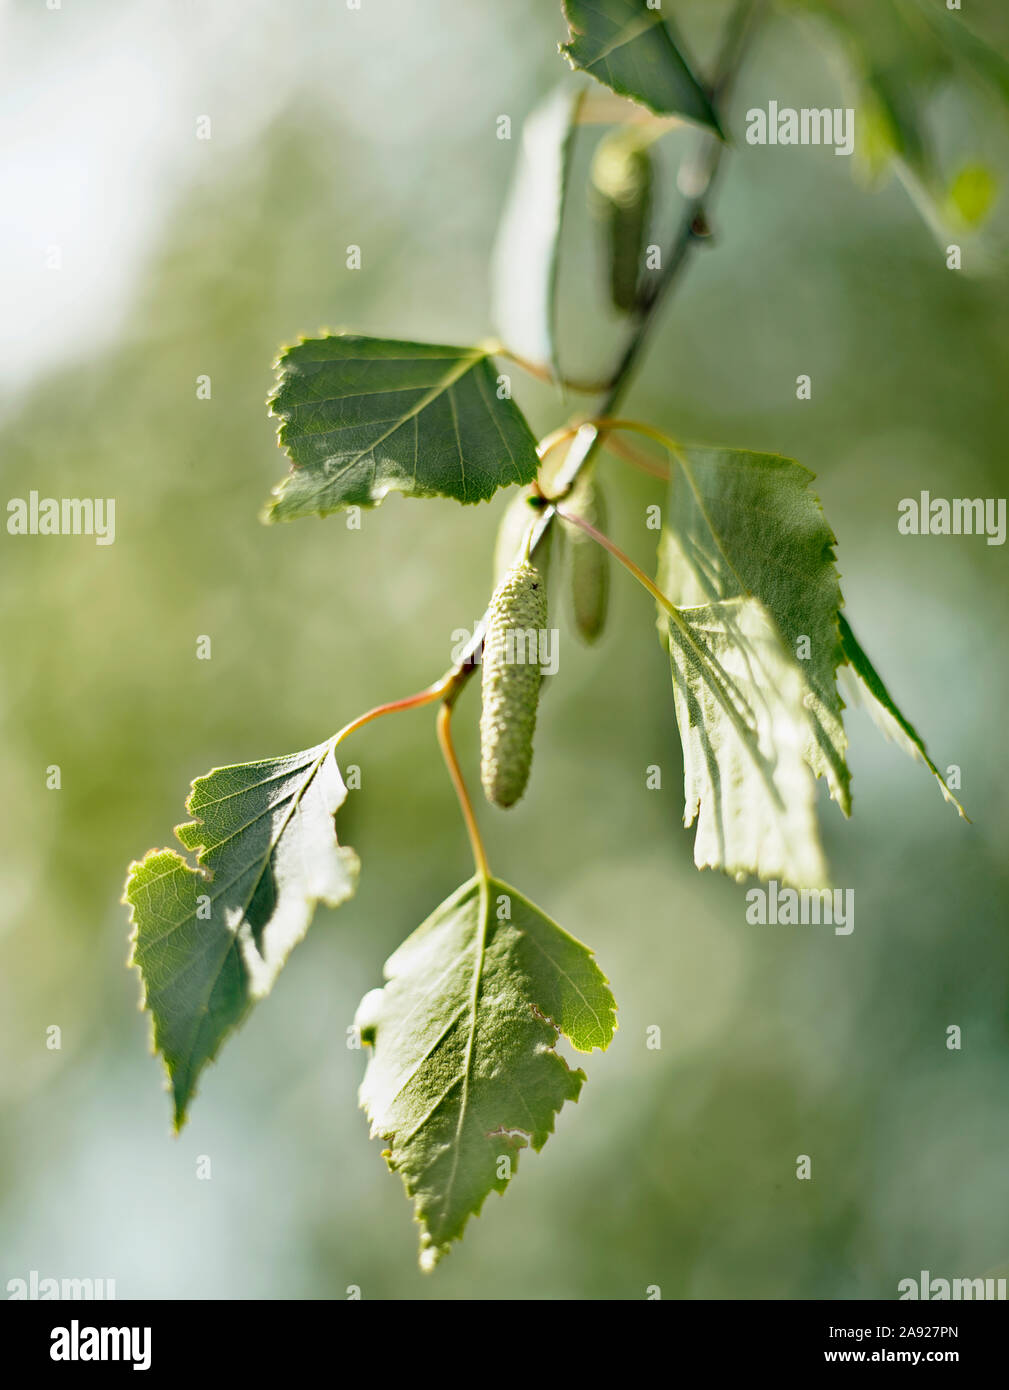 White Birch Tree Bark Close-up Stock Image - Image of outdoors, season:  181631179